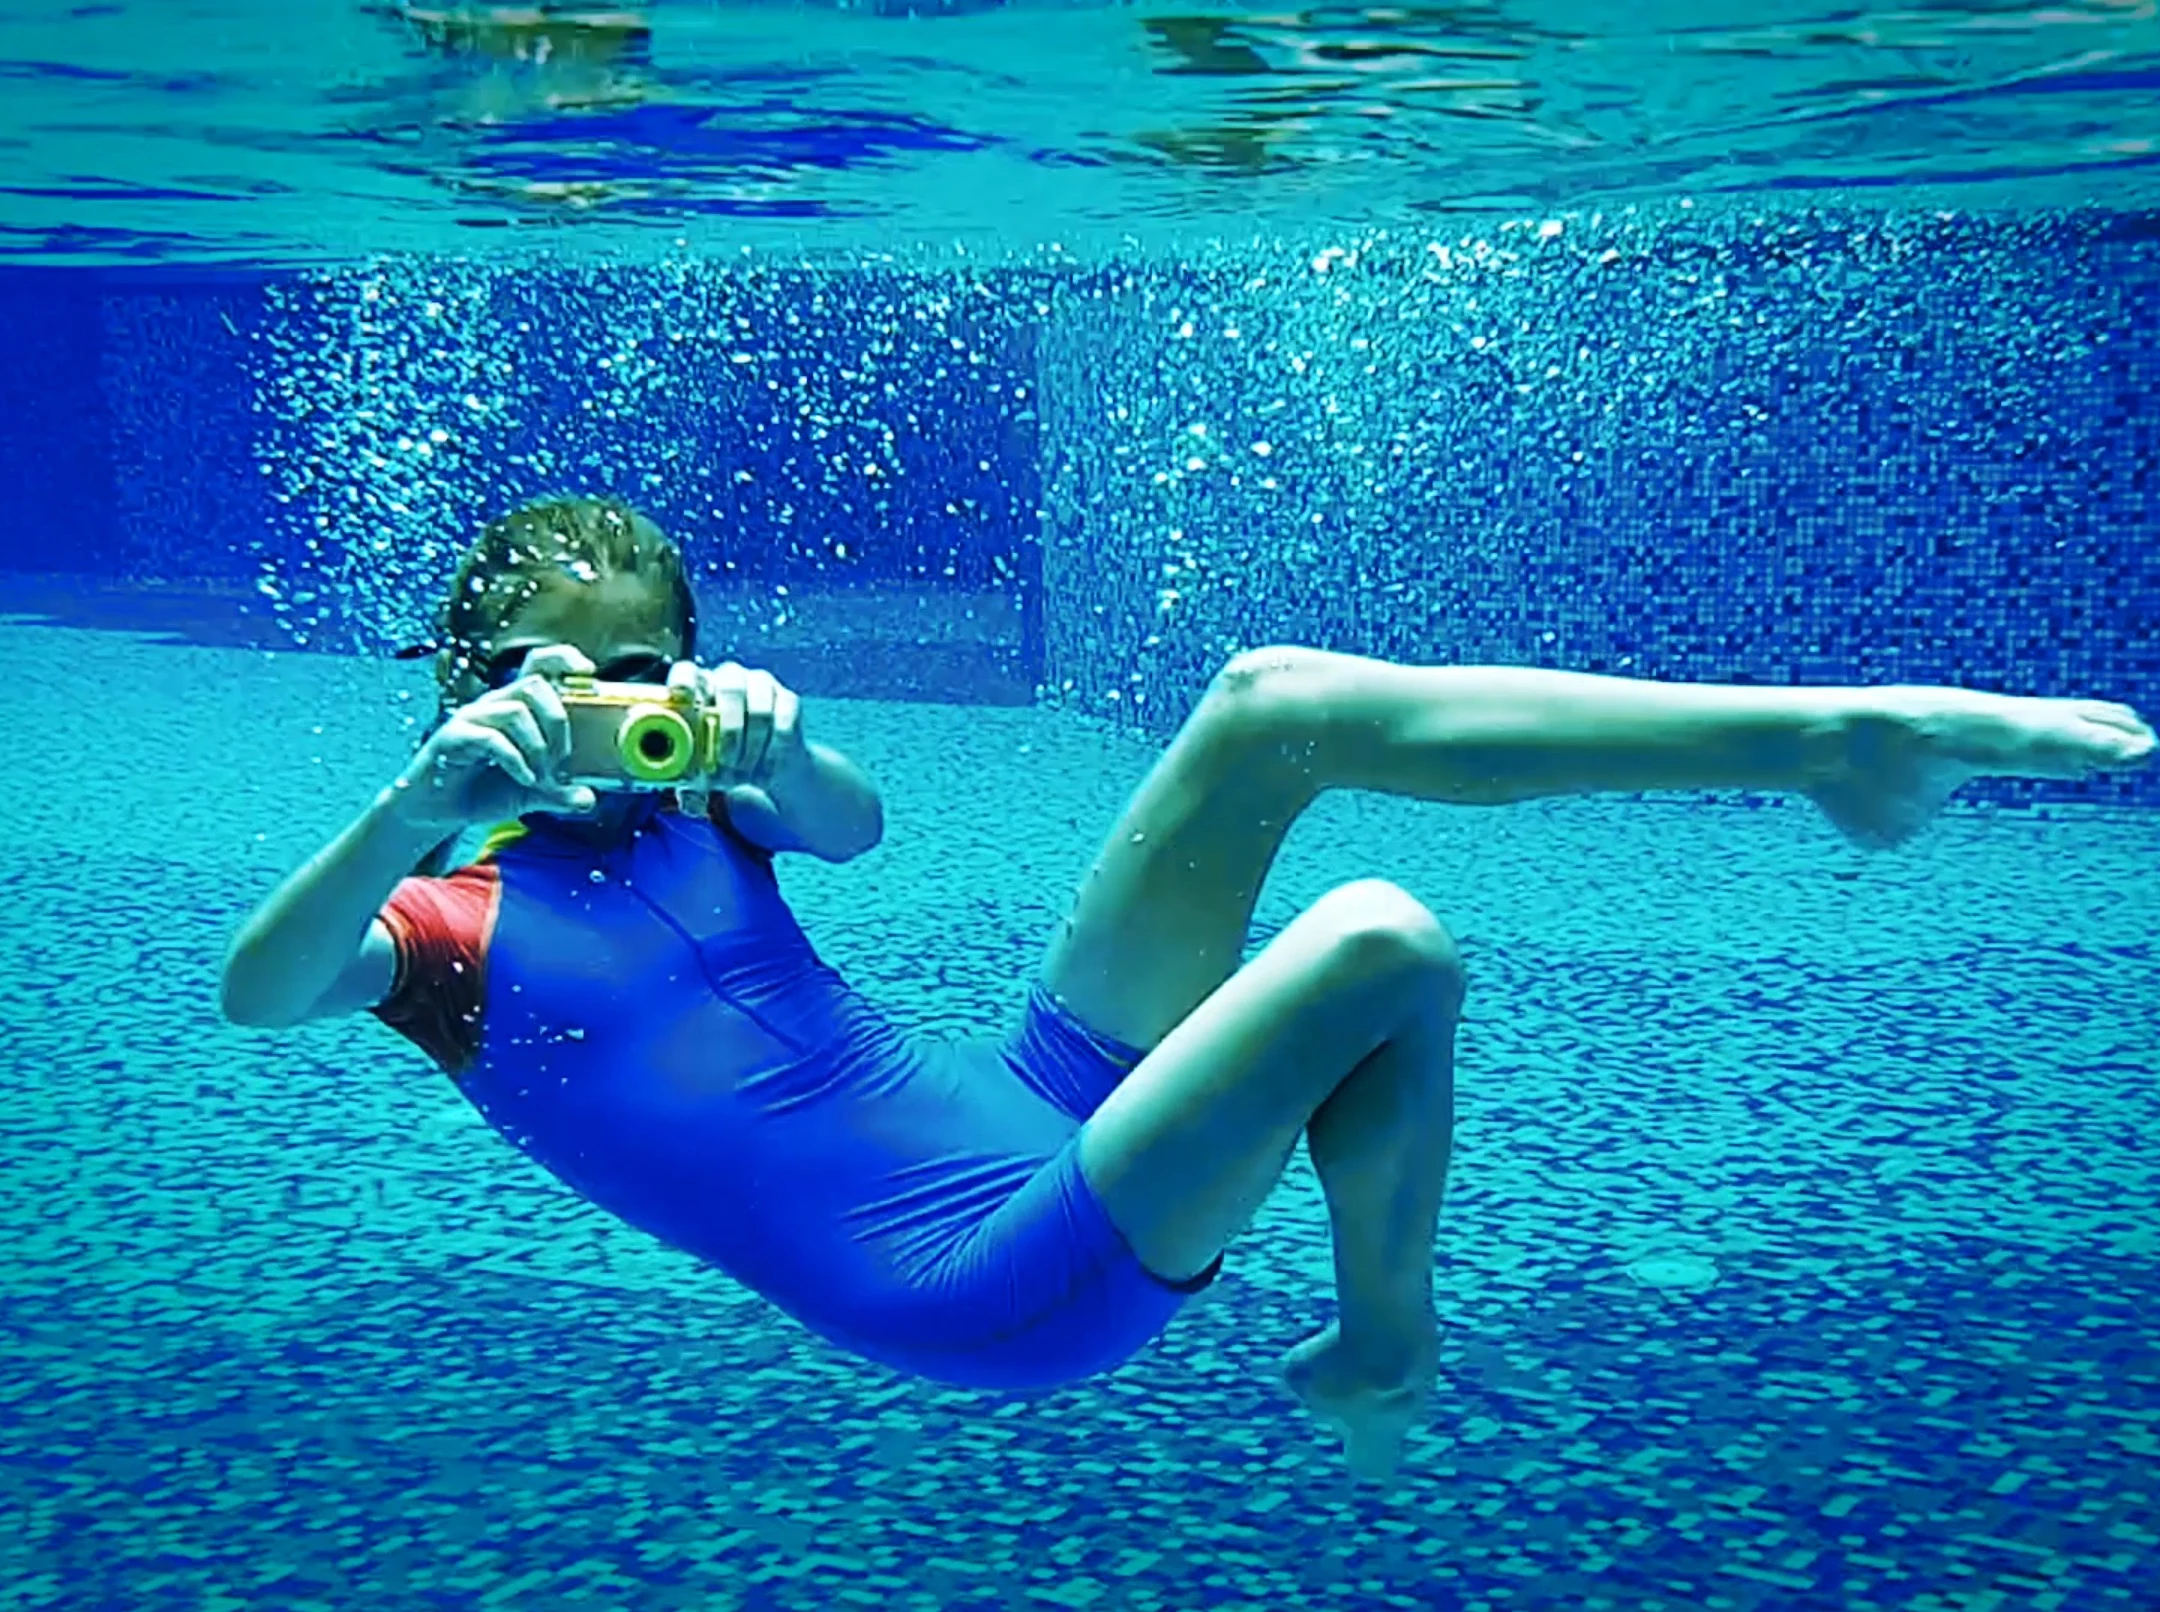 myFirst Camera 2 - Best waterproof camera for kids